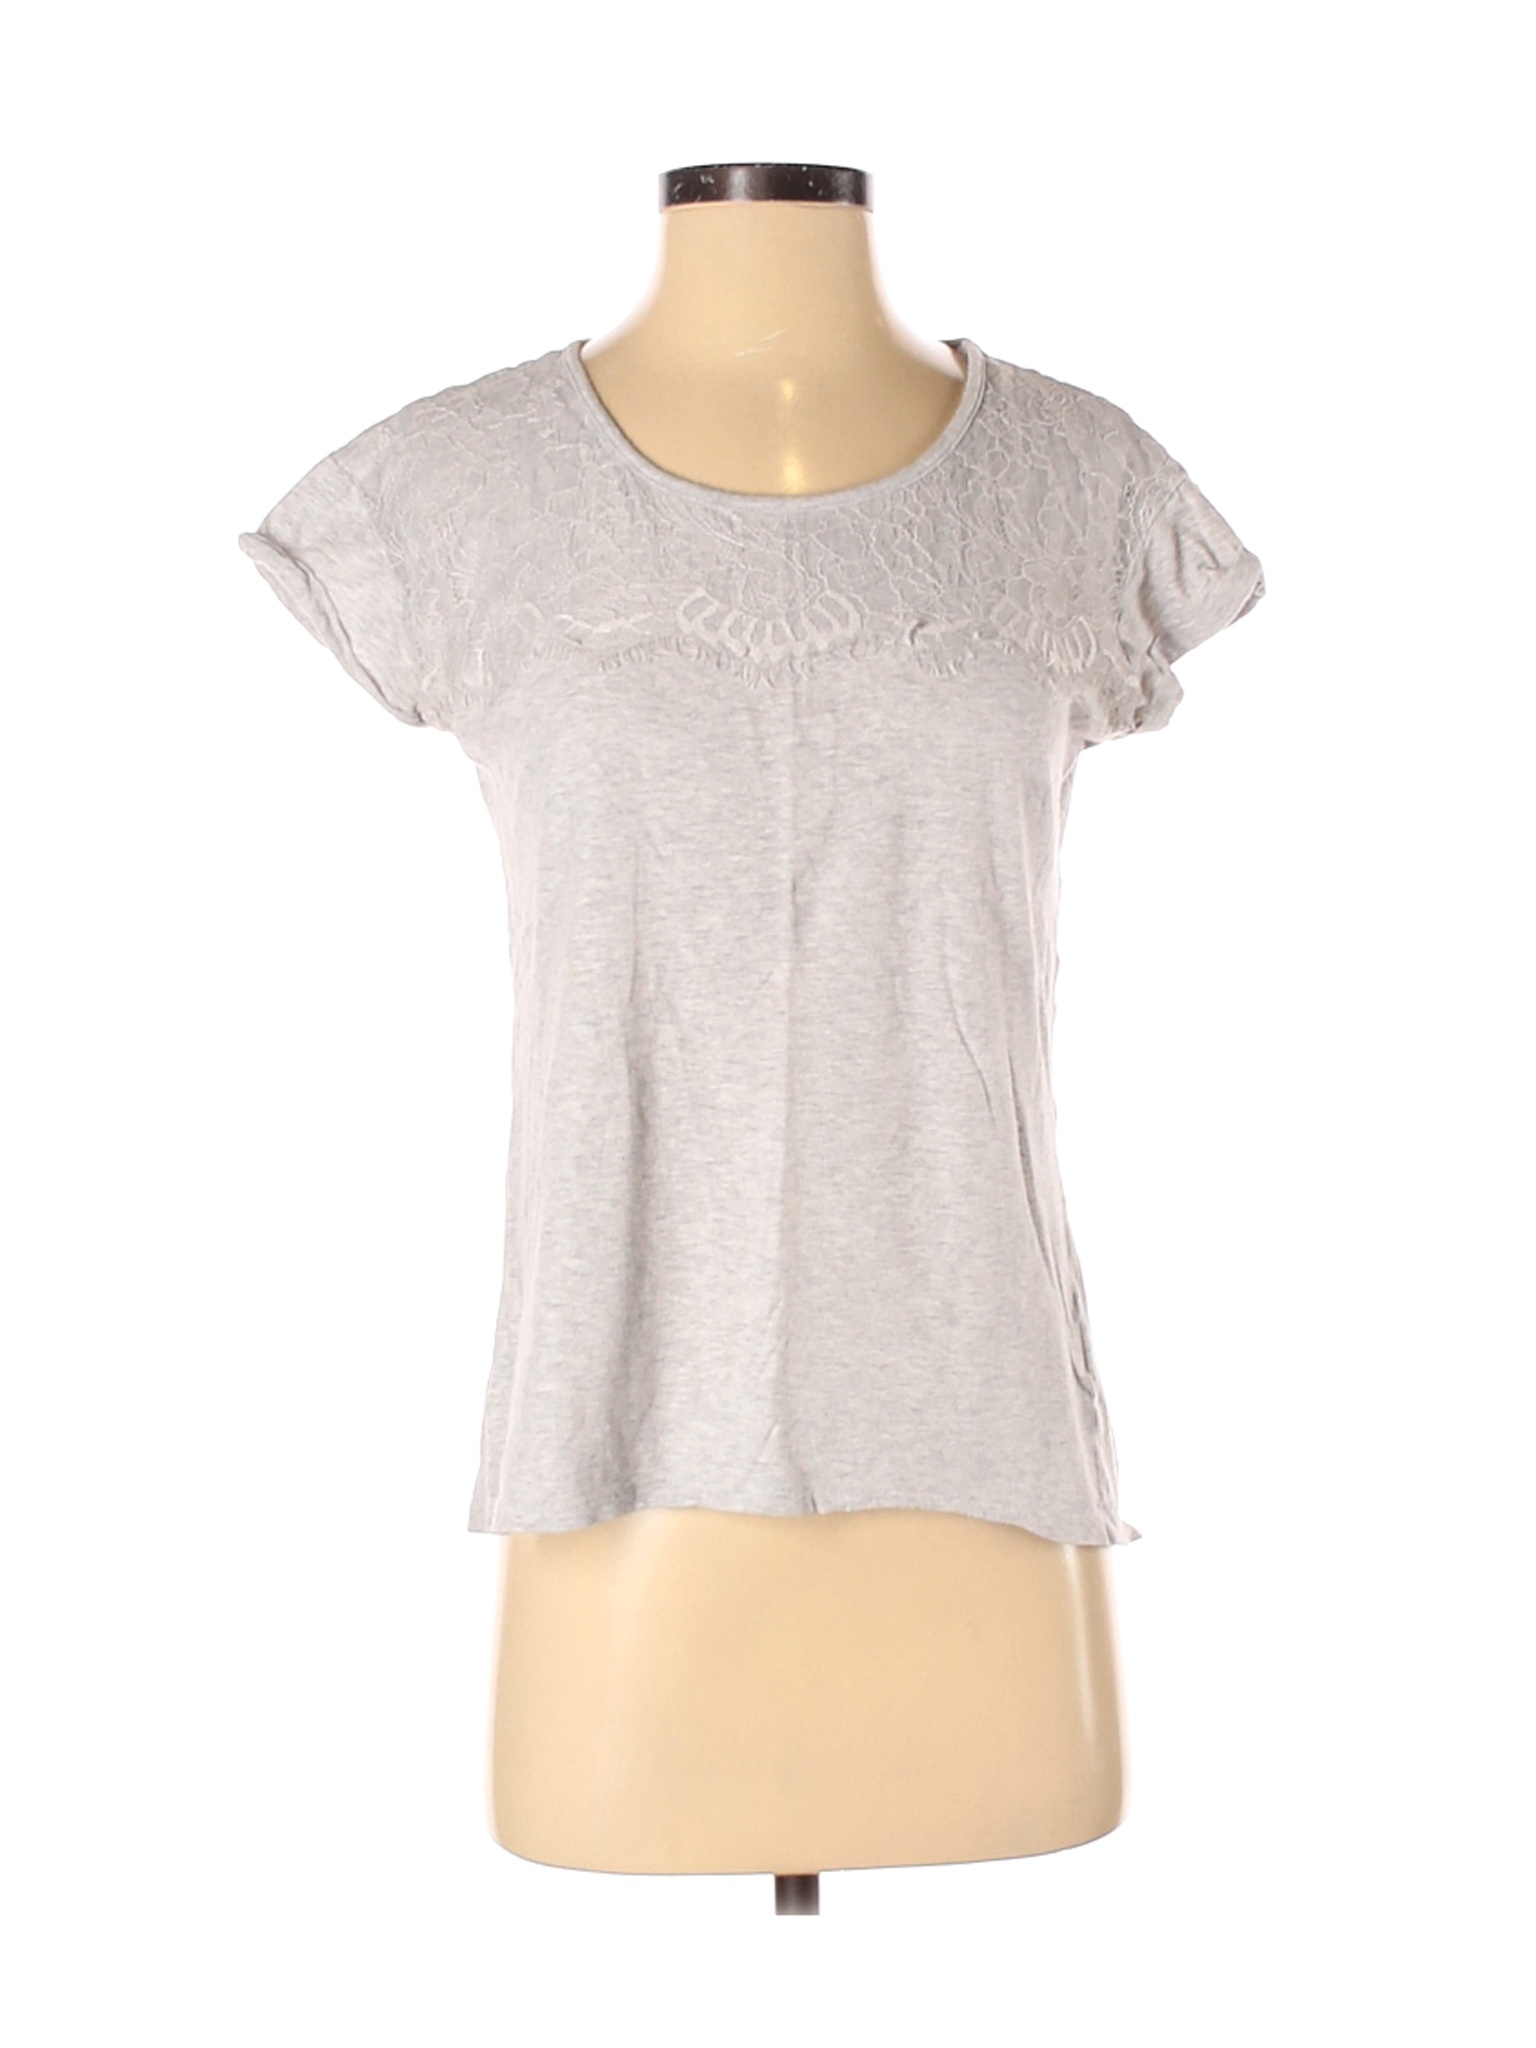 SONOMA life + style Women Gray Short Sleeve Top XS | eBay